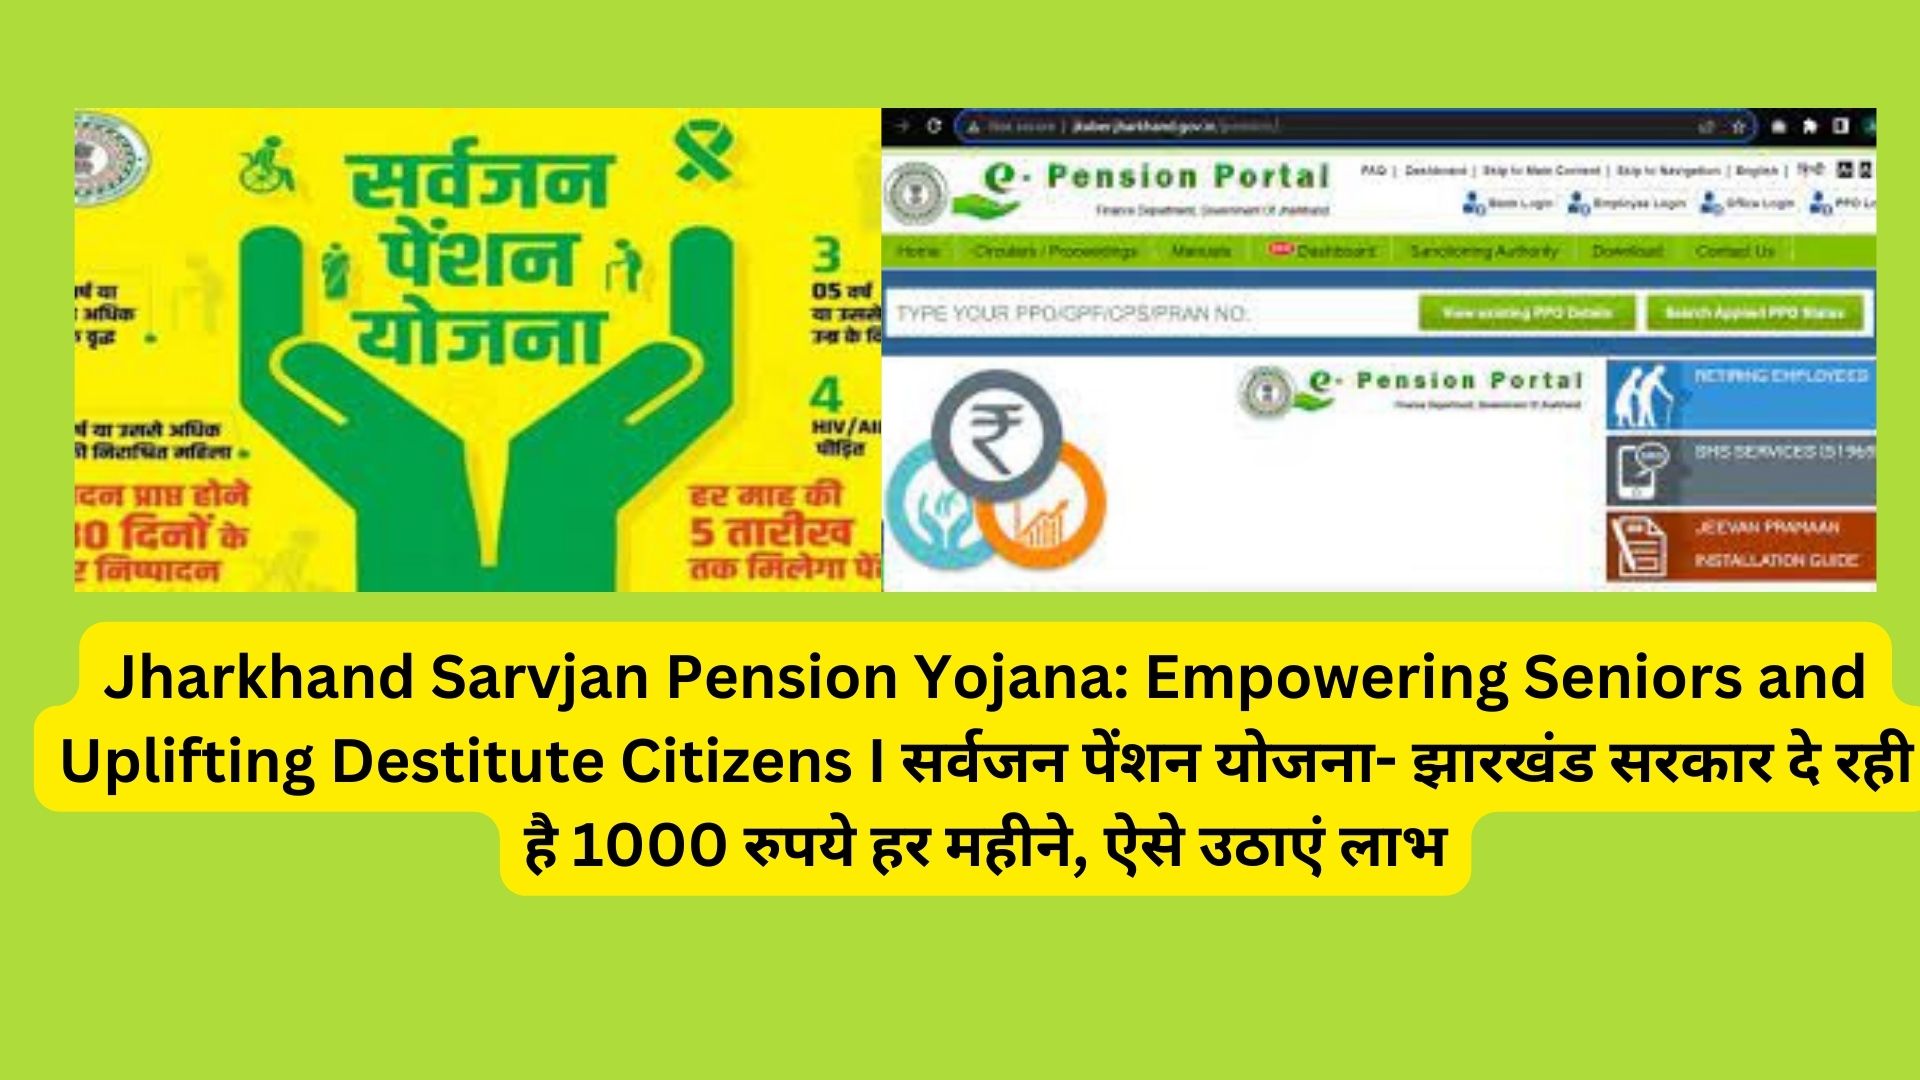 Jharkhand Sarvjan Pension Yojana: Empowering Seniors and Uplifting Destitute Citizens I सर्वजन पेंशन योजना- झारखंड सरकार दे रही है 1000 रुपये हर महीने, ऐसे उठाएं लाभ